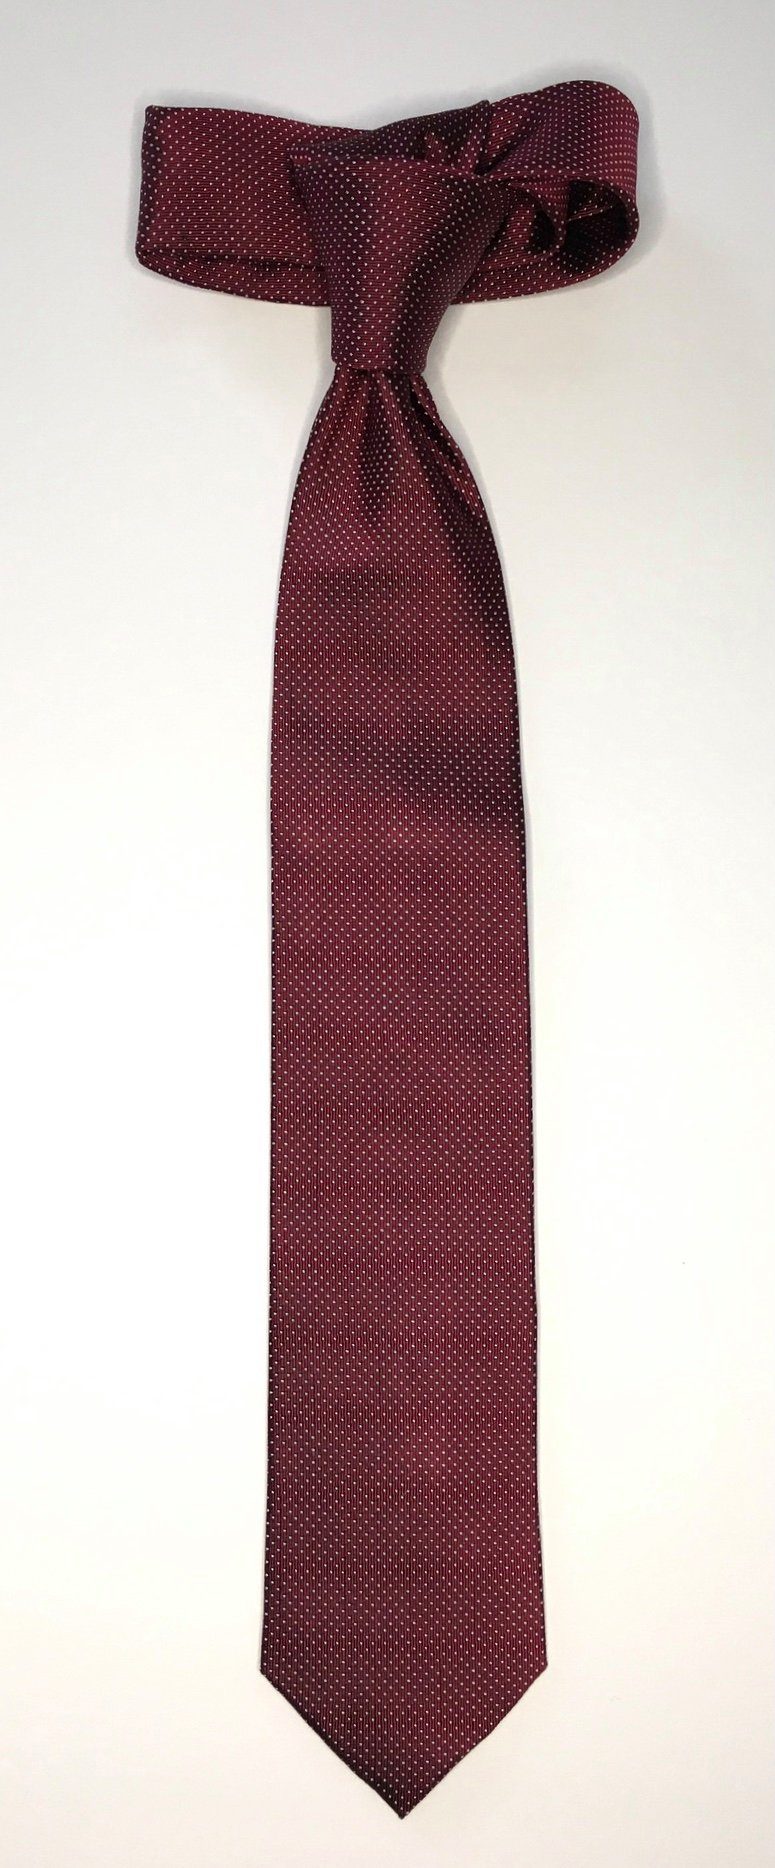 Seidenfalter Krawatte Seidenfalter 7cm Krawatte Wine Picoté